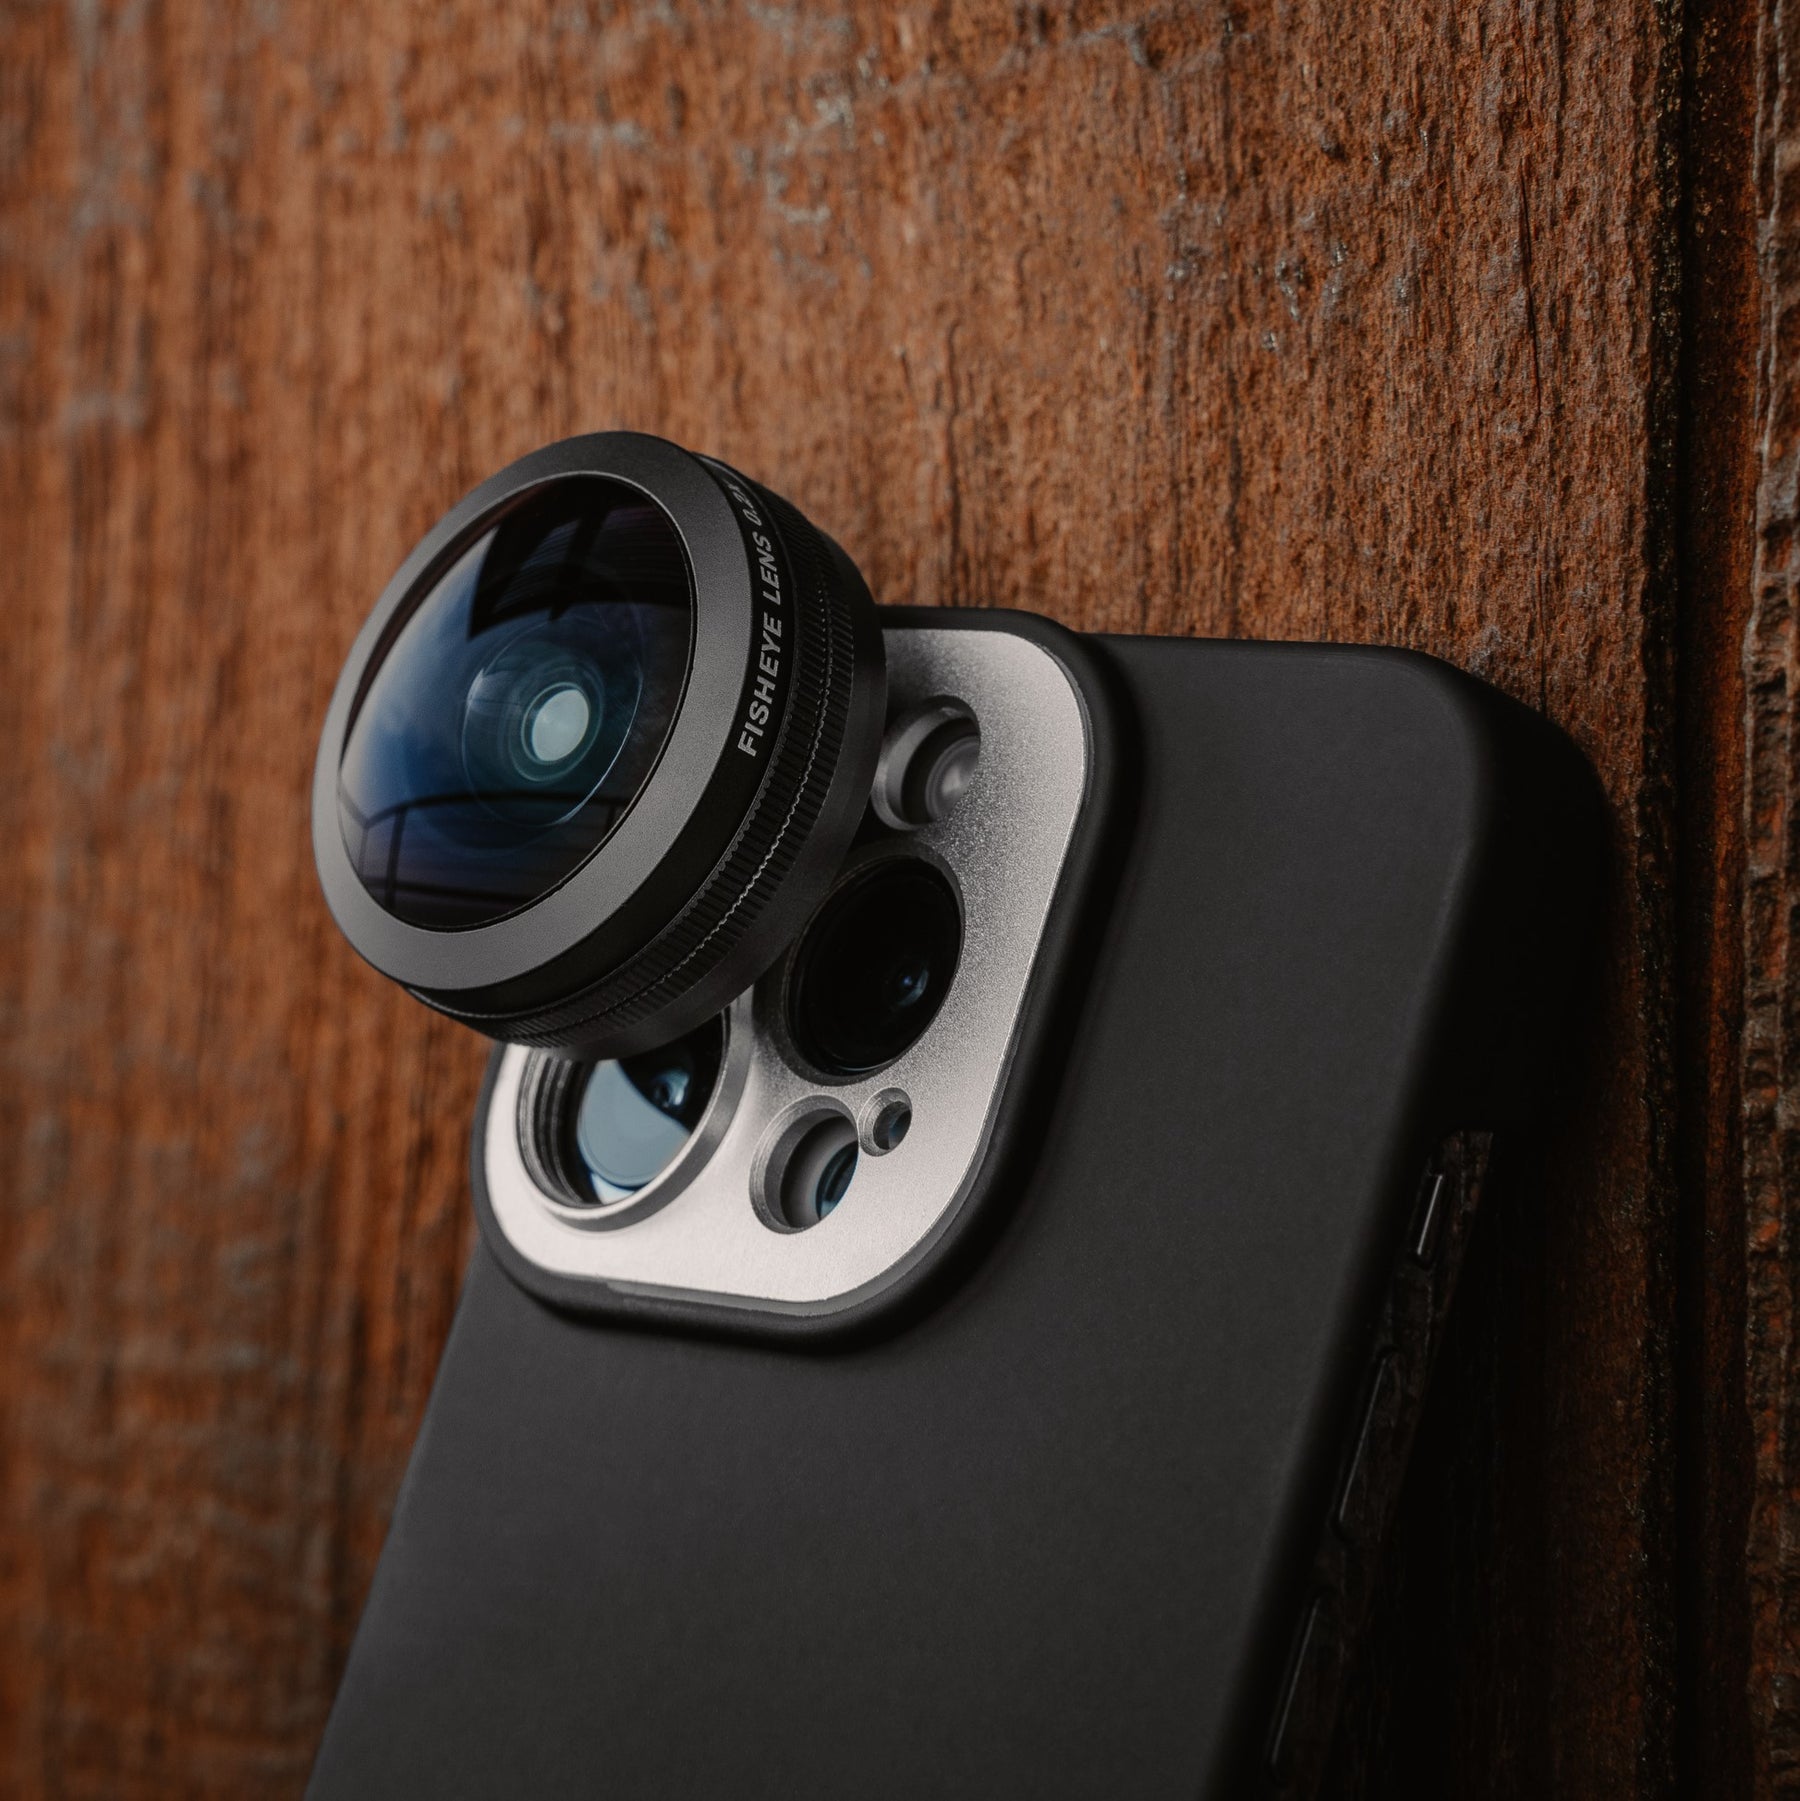 iphone 6 camera lens distortion